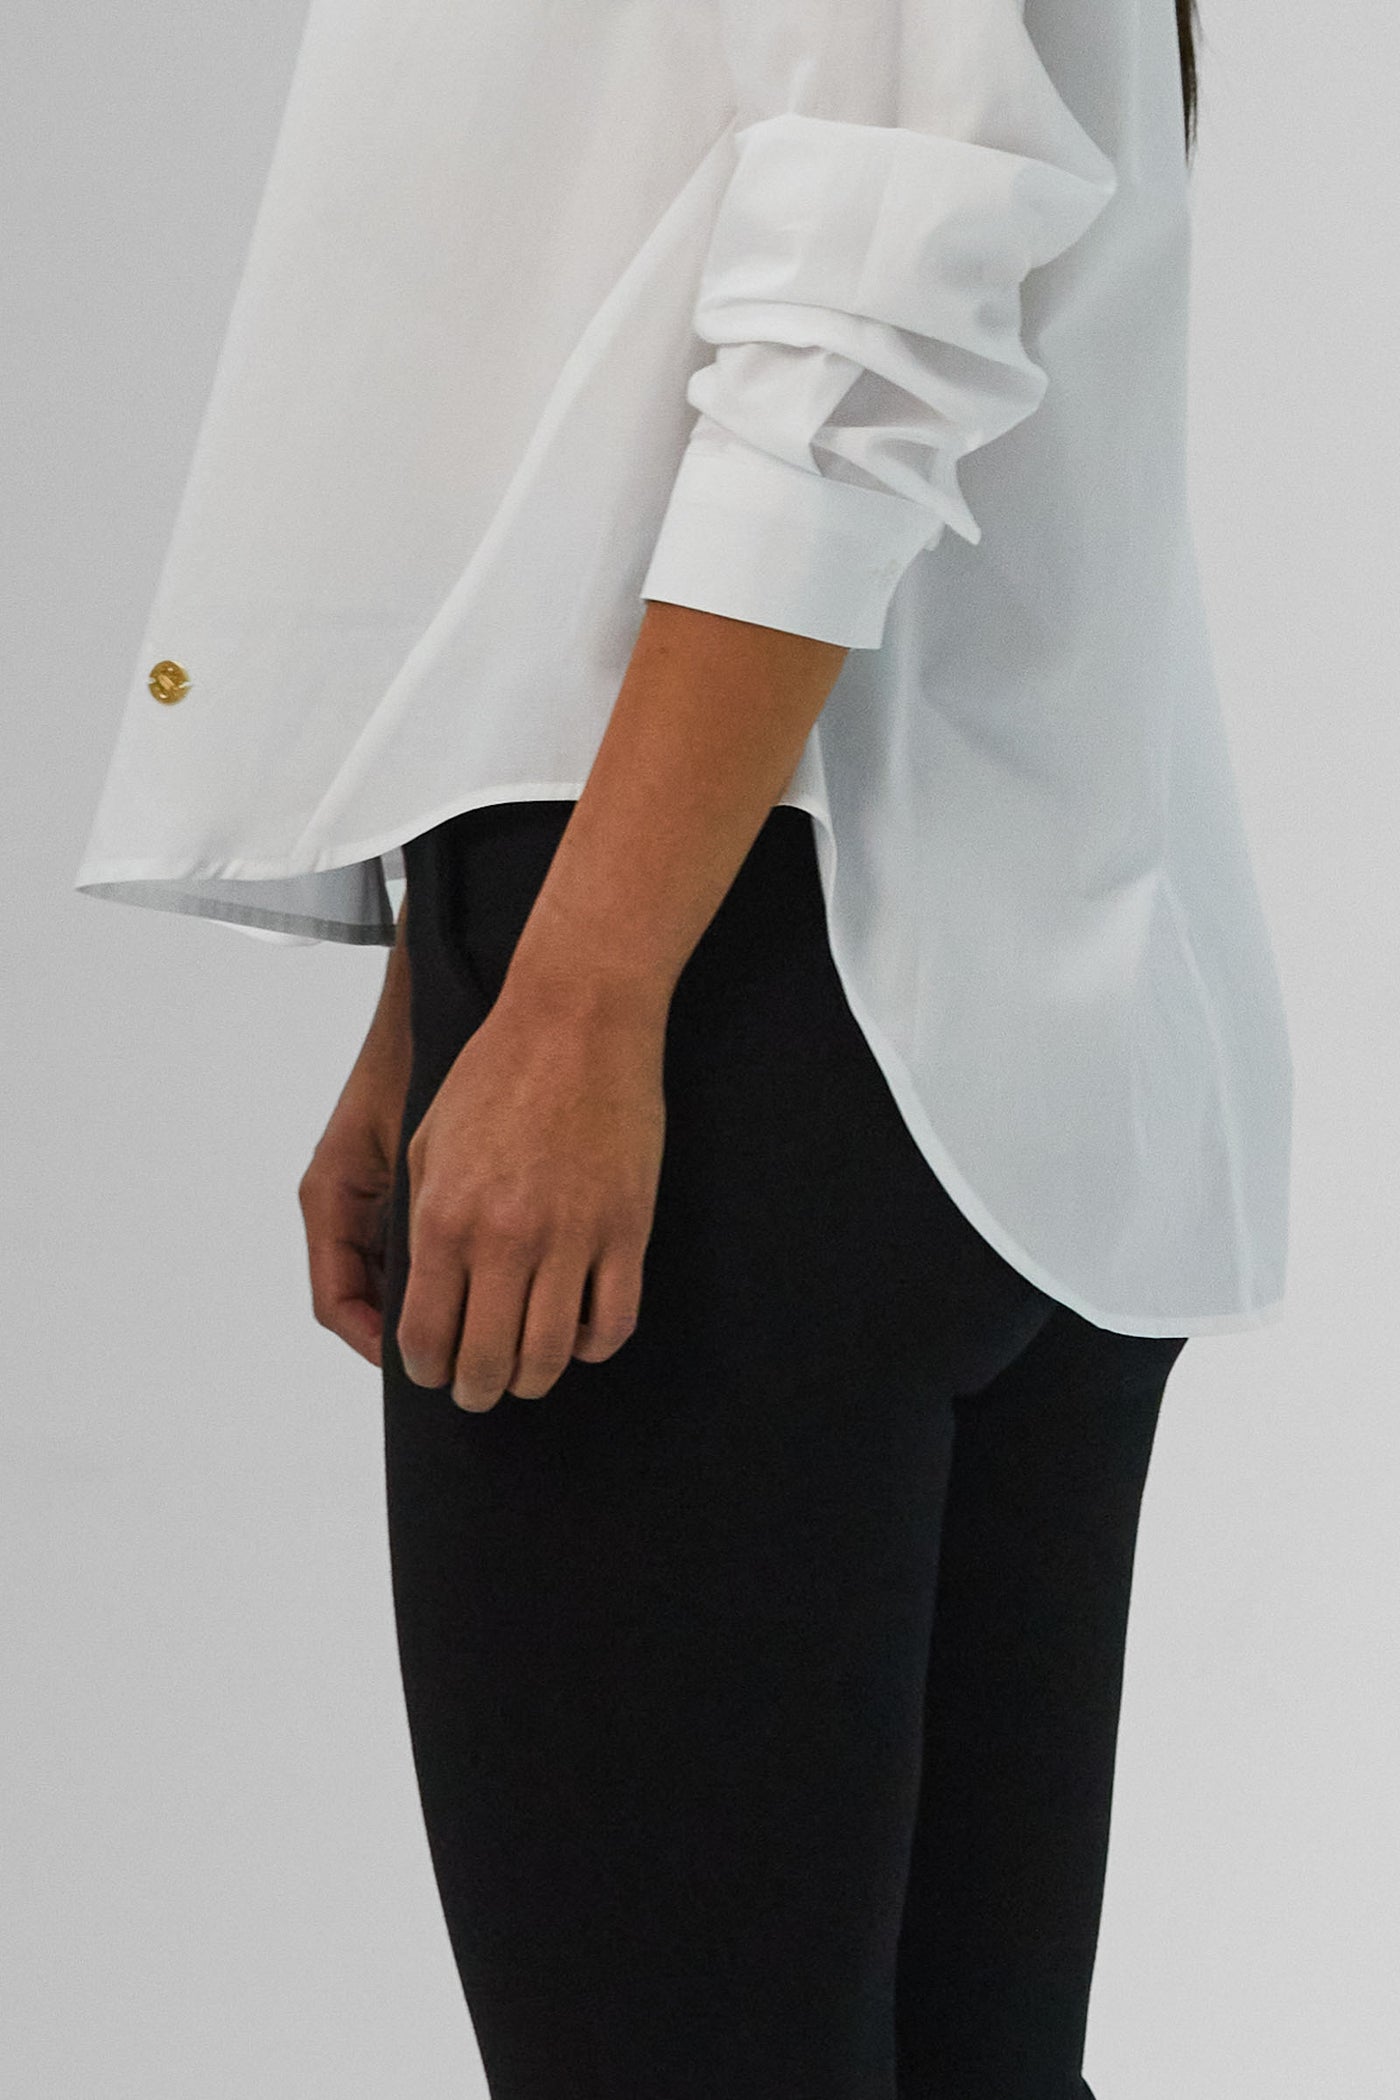 Rainha White High-Low Shirt